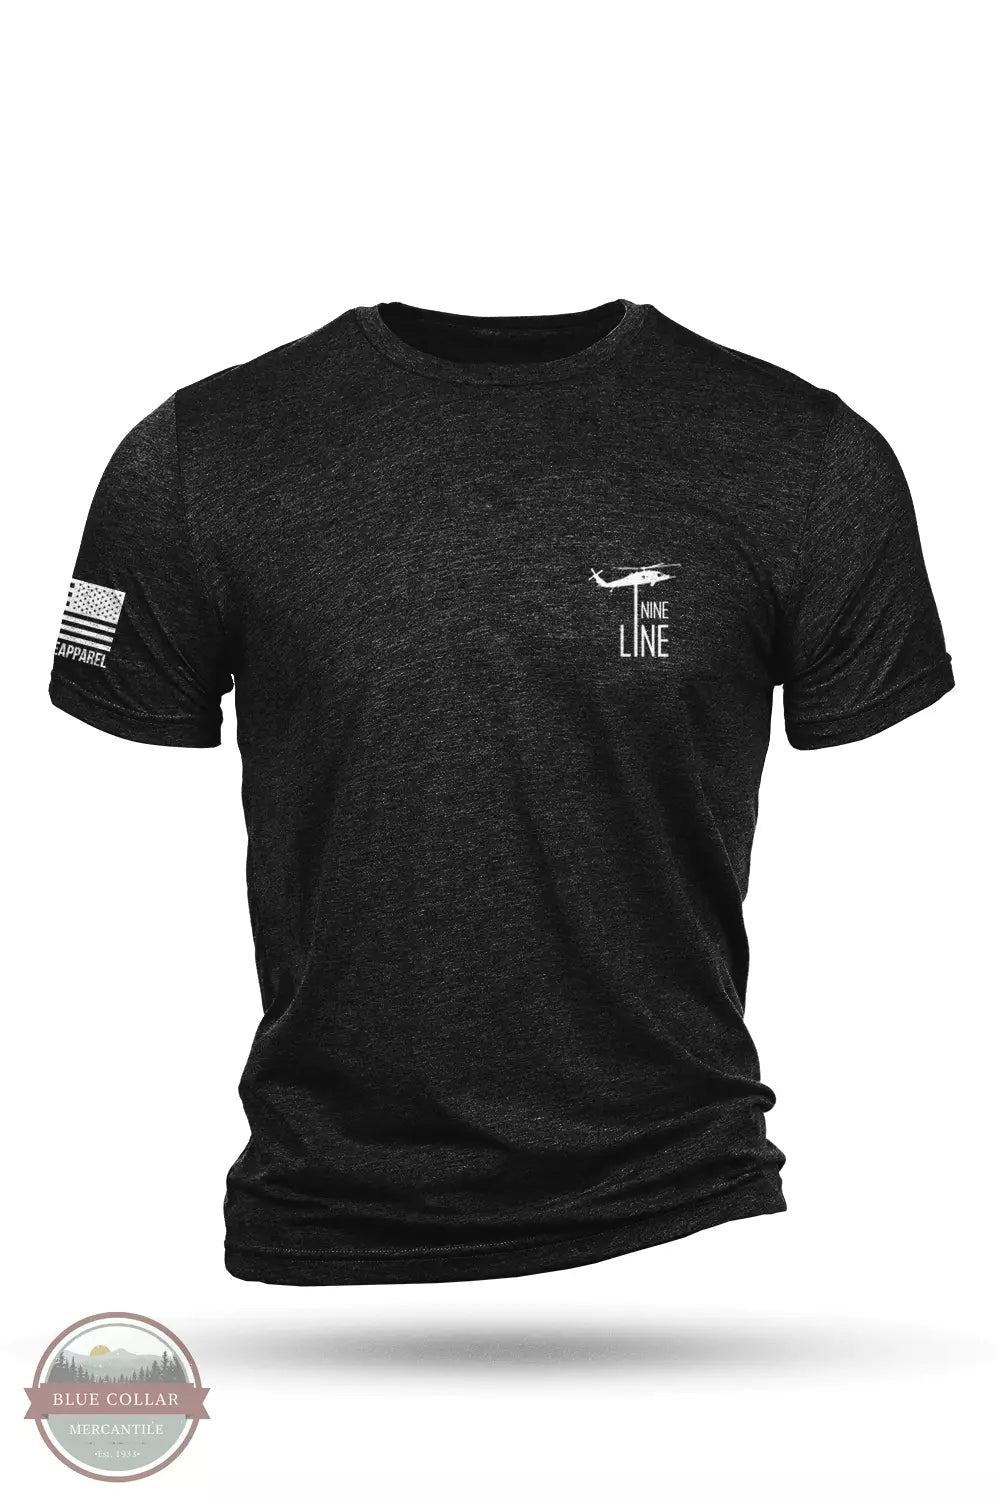 Nine Line FLAGSCH-TSTRI-CHARCOALBLACK American Flag Schematic Tri-Blend Short Sleeve T-Shirt in Charcoal Black Front View